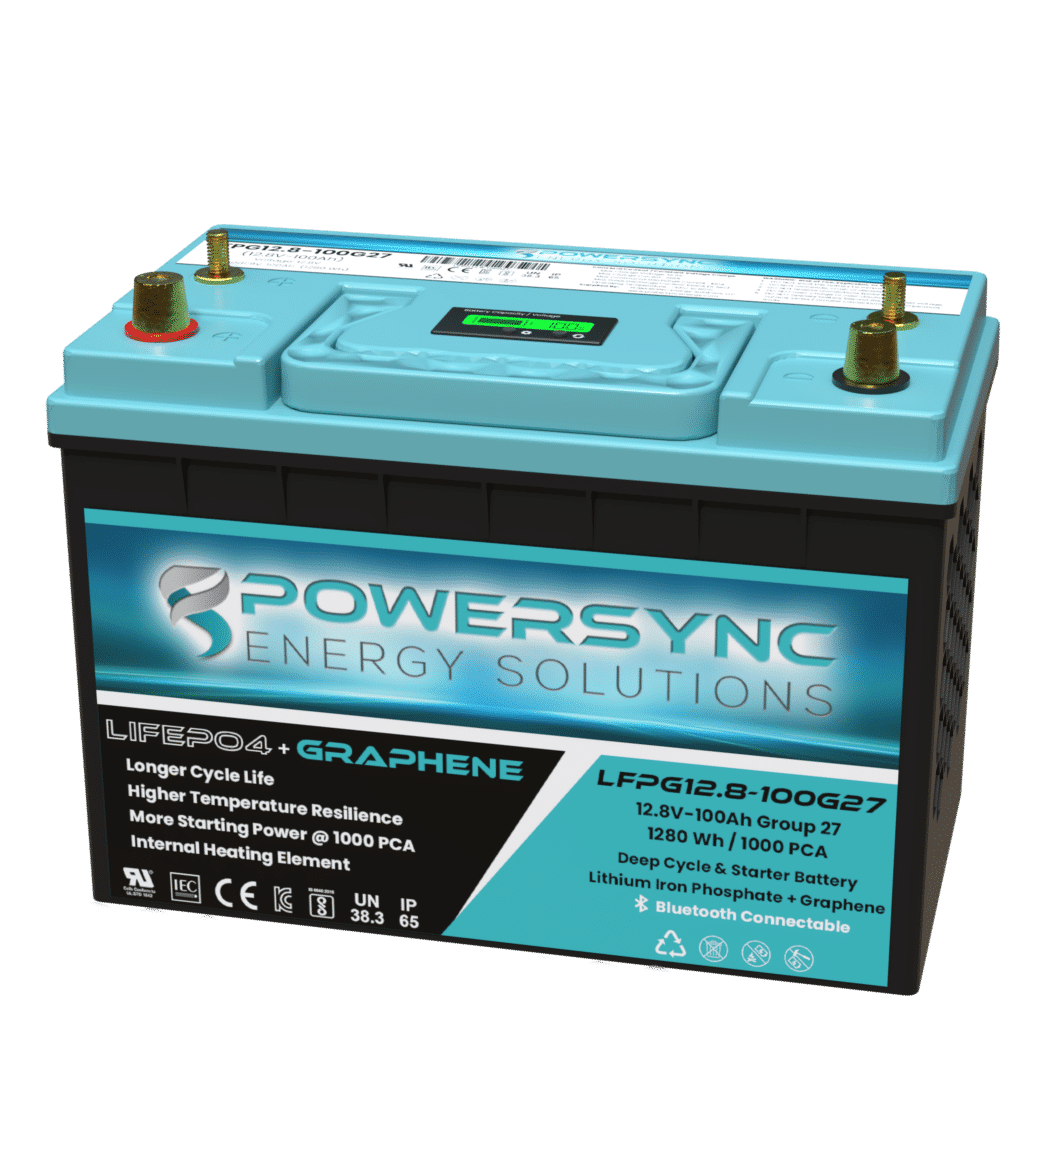 LFPG12.8-100G27 Batería de Litio de Doble Uso LiFePO4+Grafeno - POWERSYNC  Energy Solutions